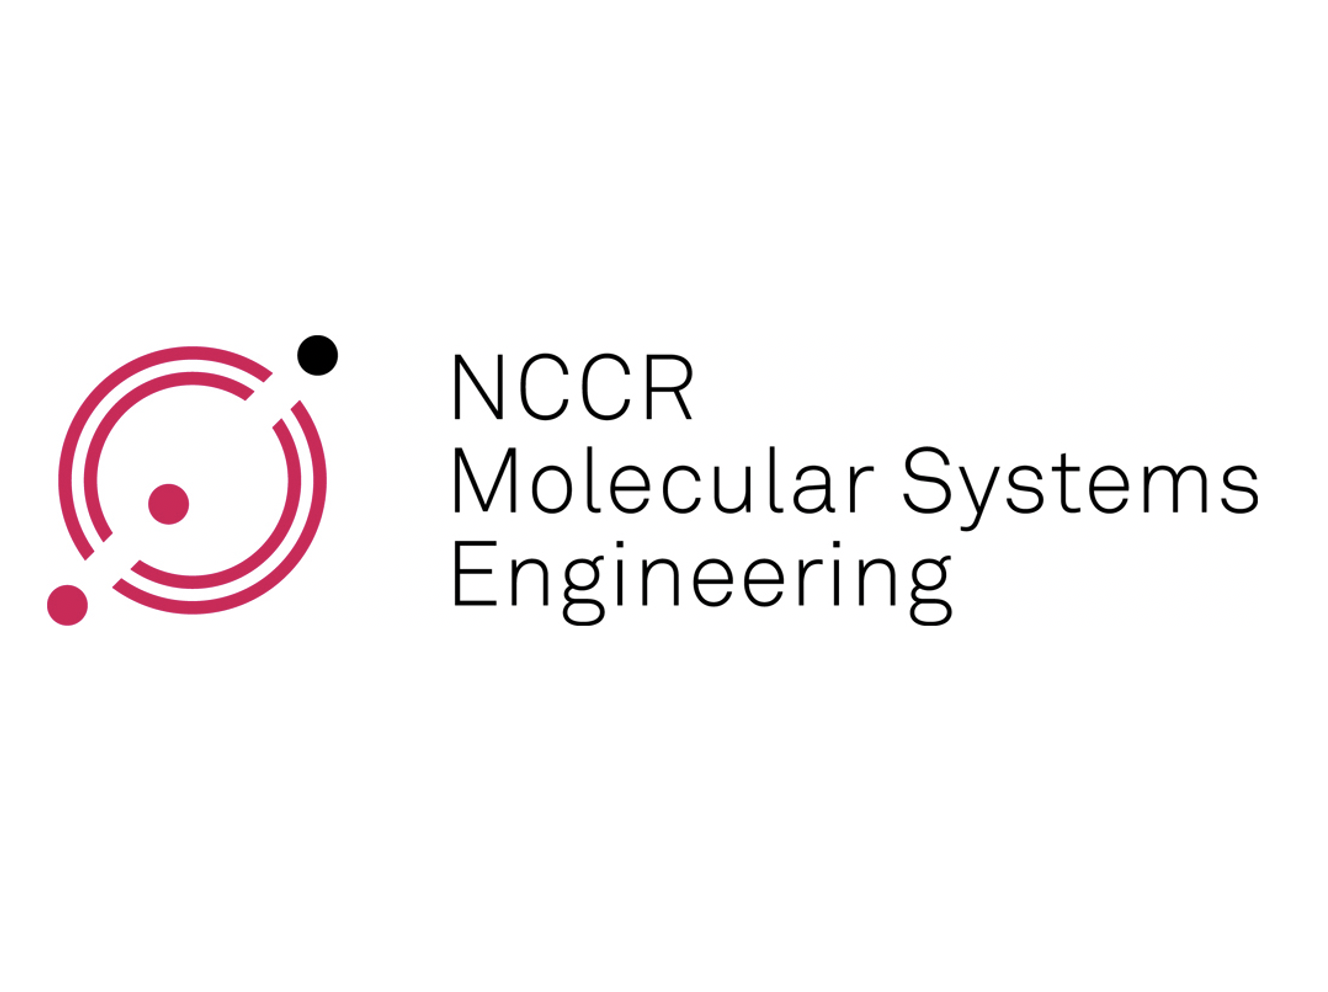 NCCR Molecular Systems Engineering